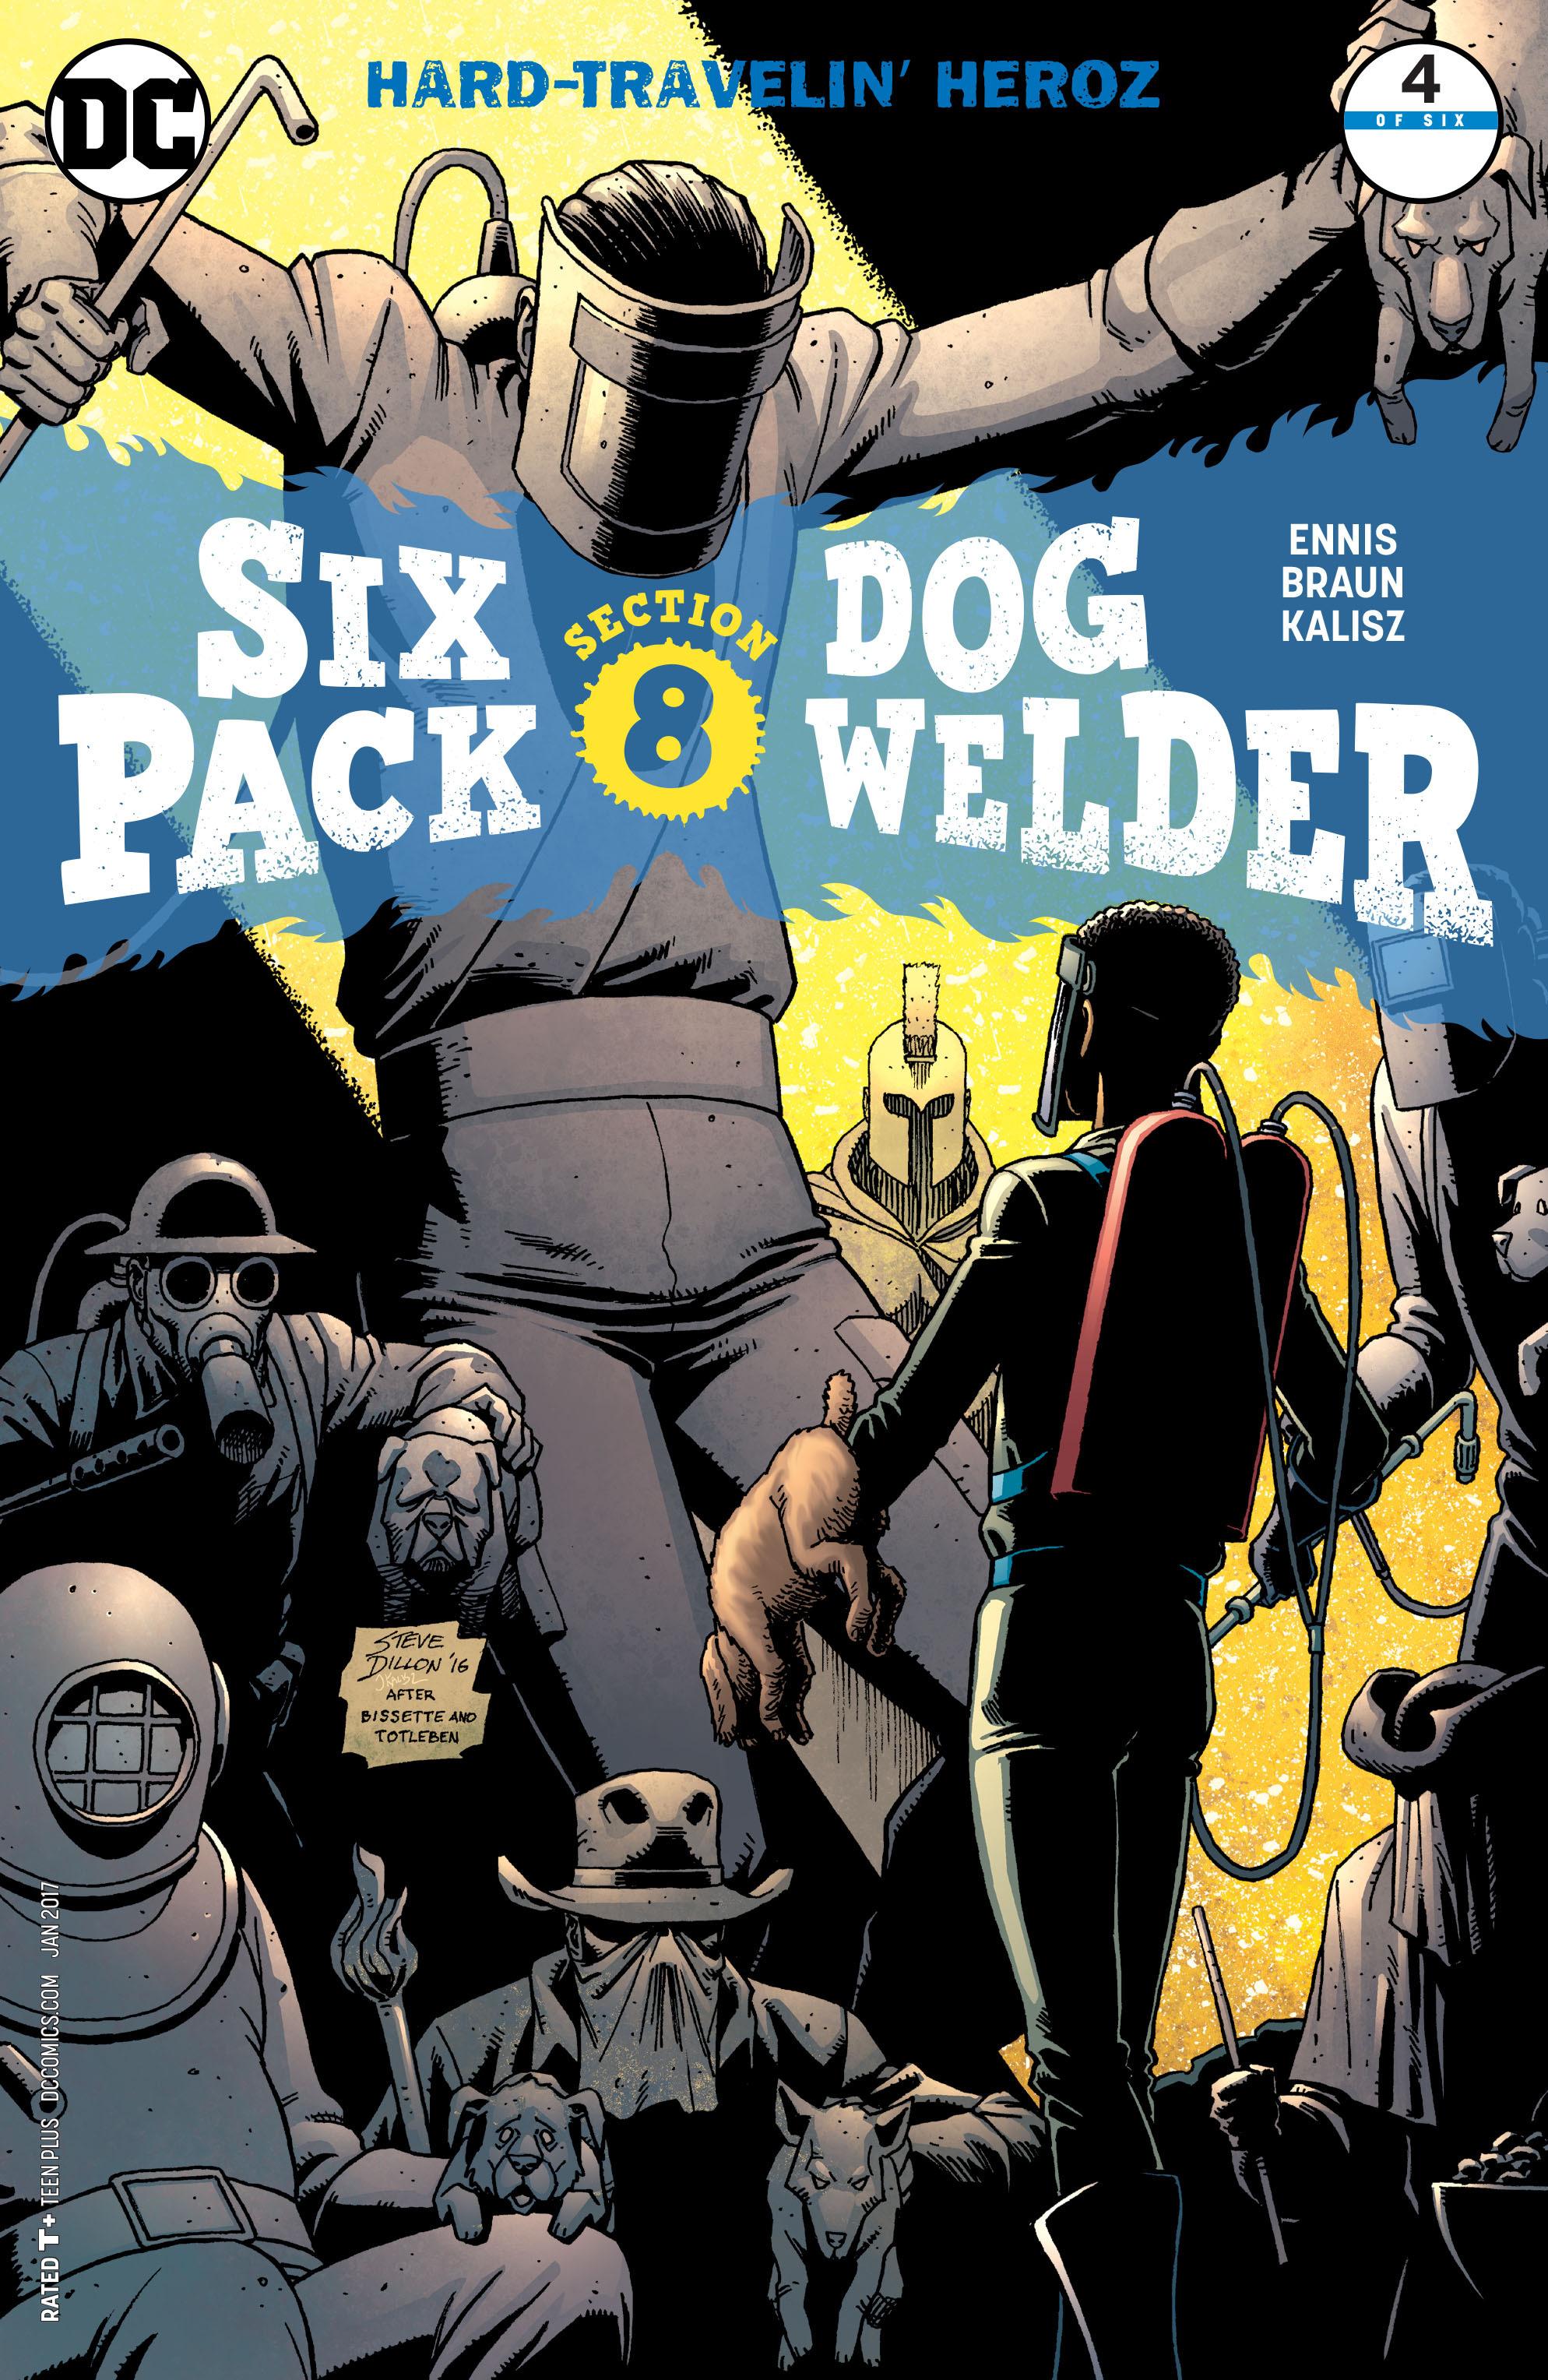 Sixpack and Dogwelder: Hard-Travelin' Heroz Vol. 1 #4